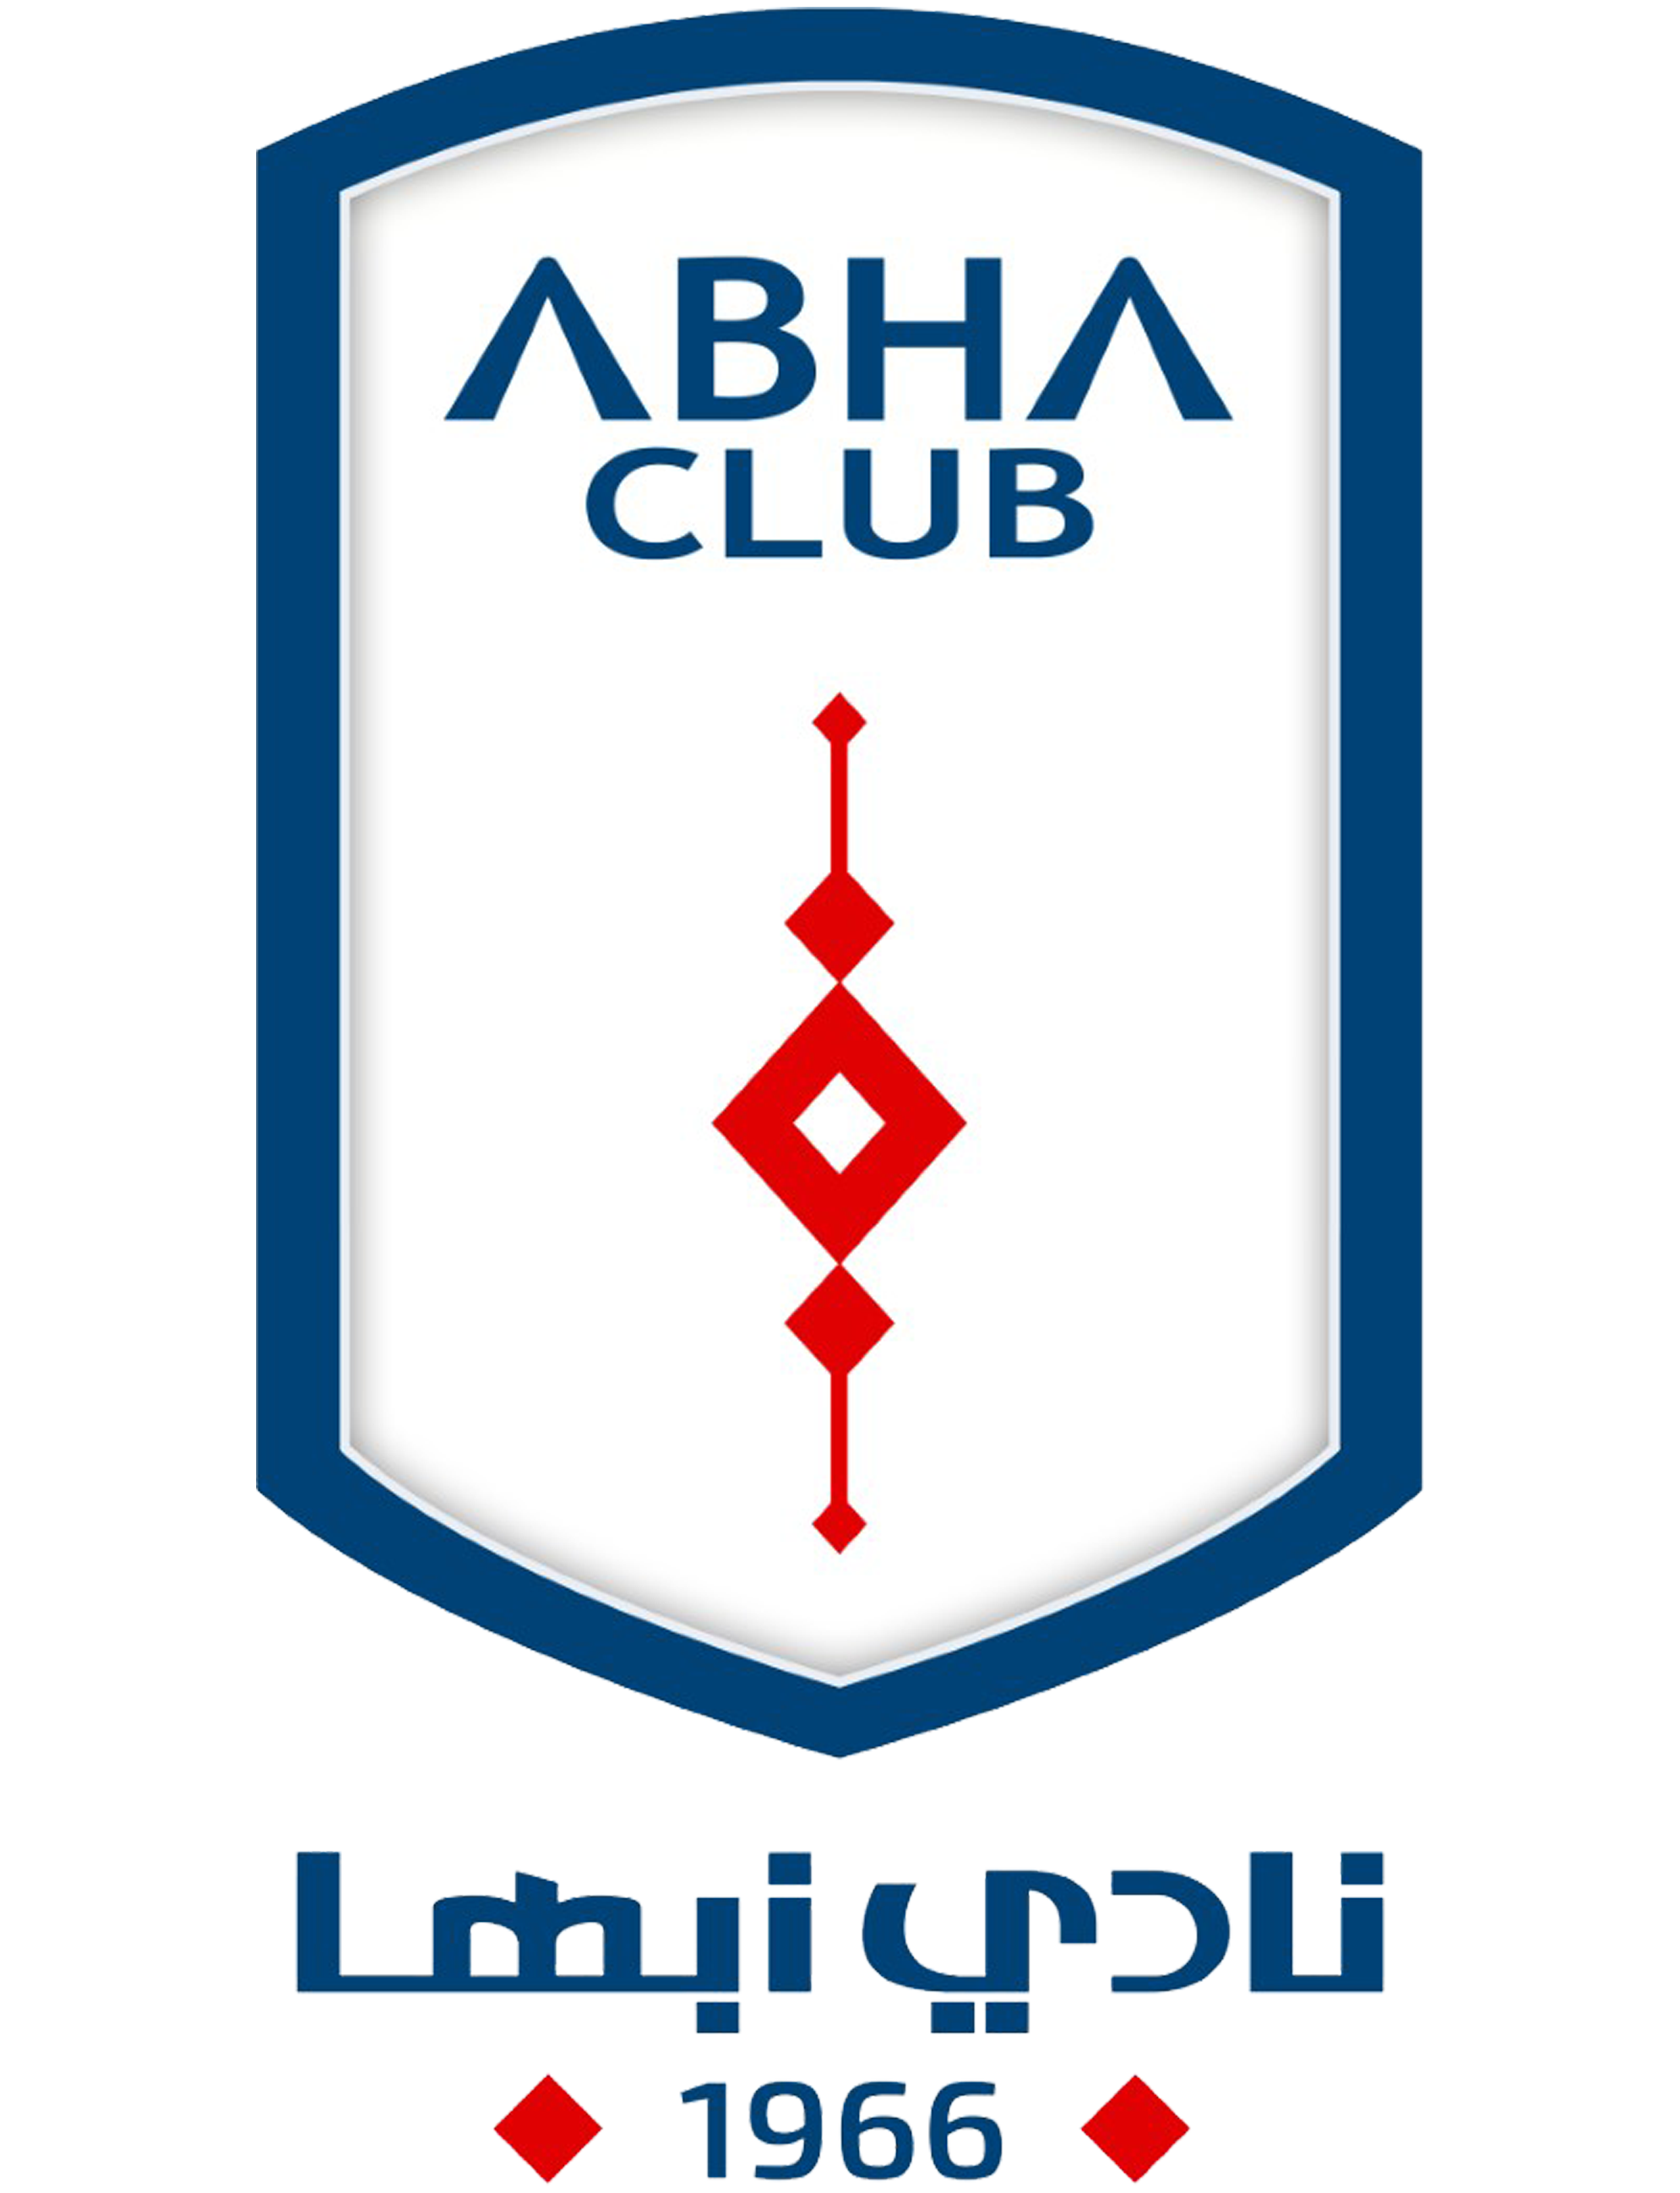 Abha-club meeting